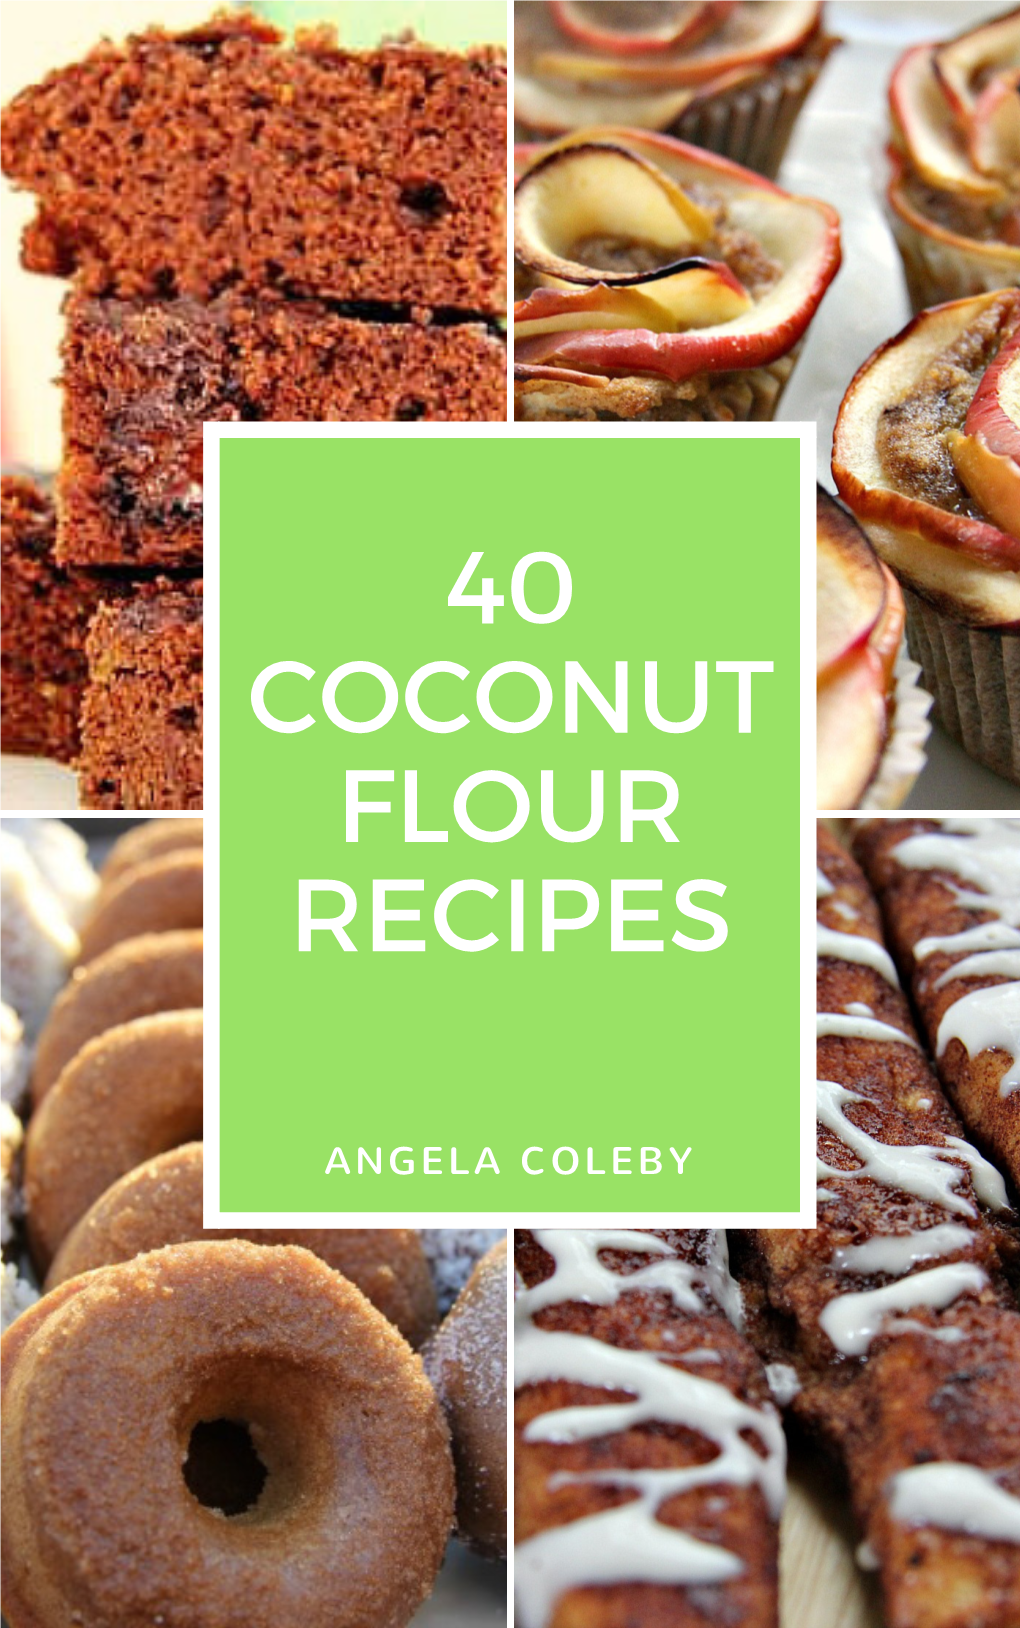 Coconut Flour Ecookbook